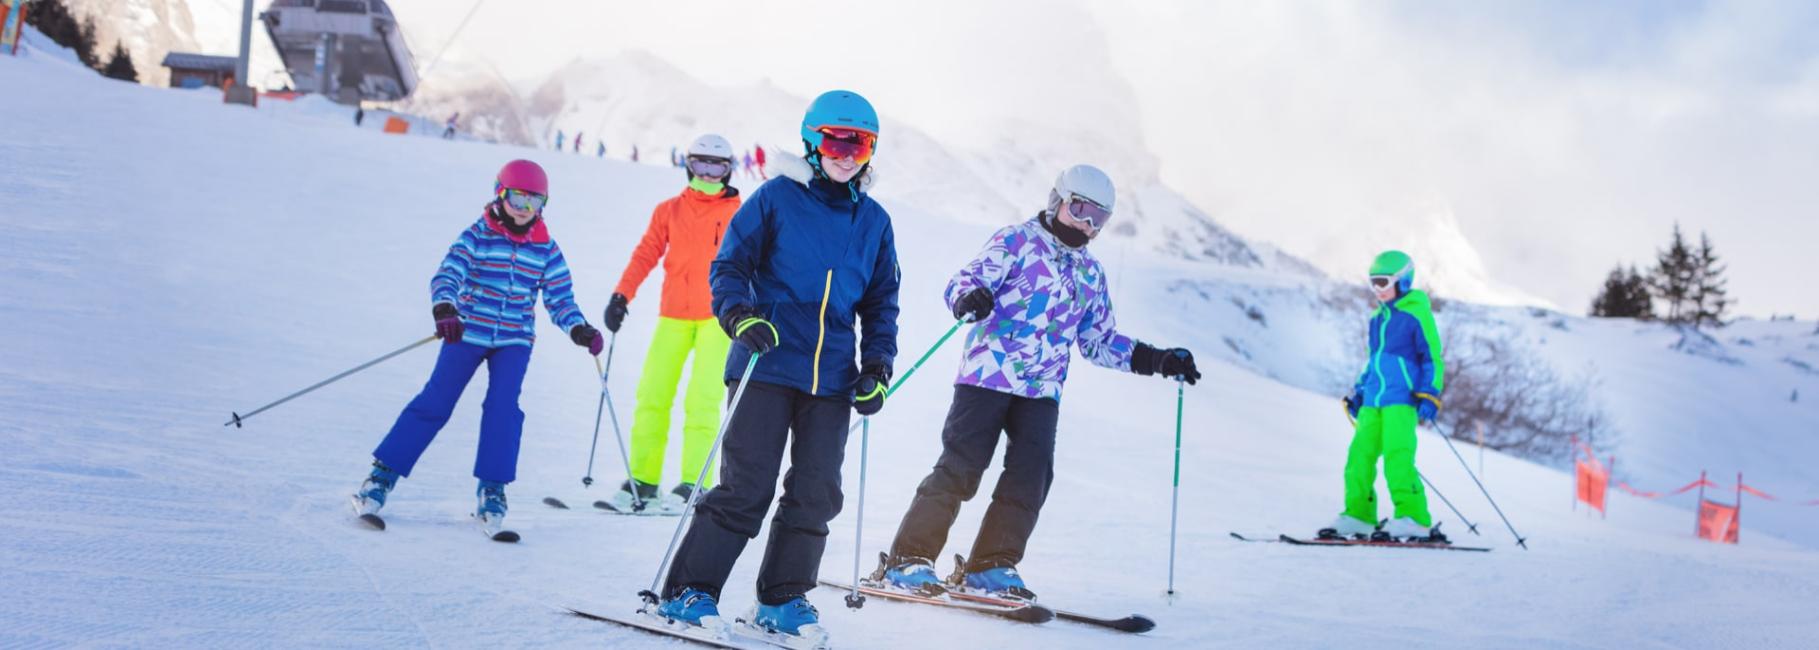 School Ski Trips To Italy